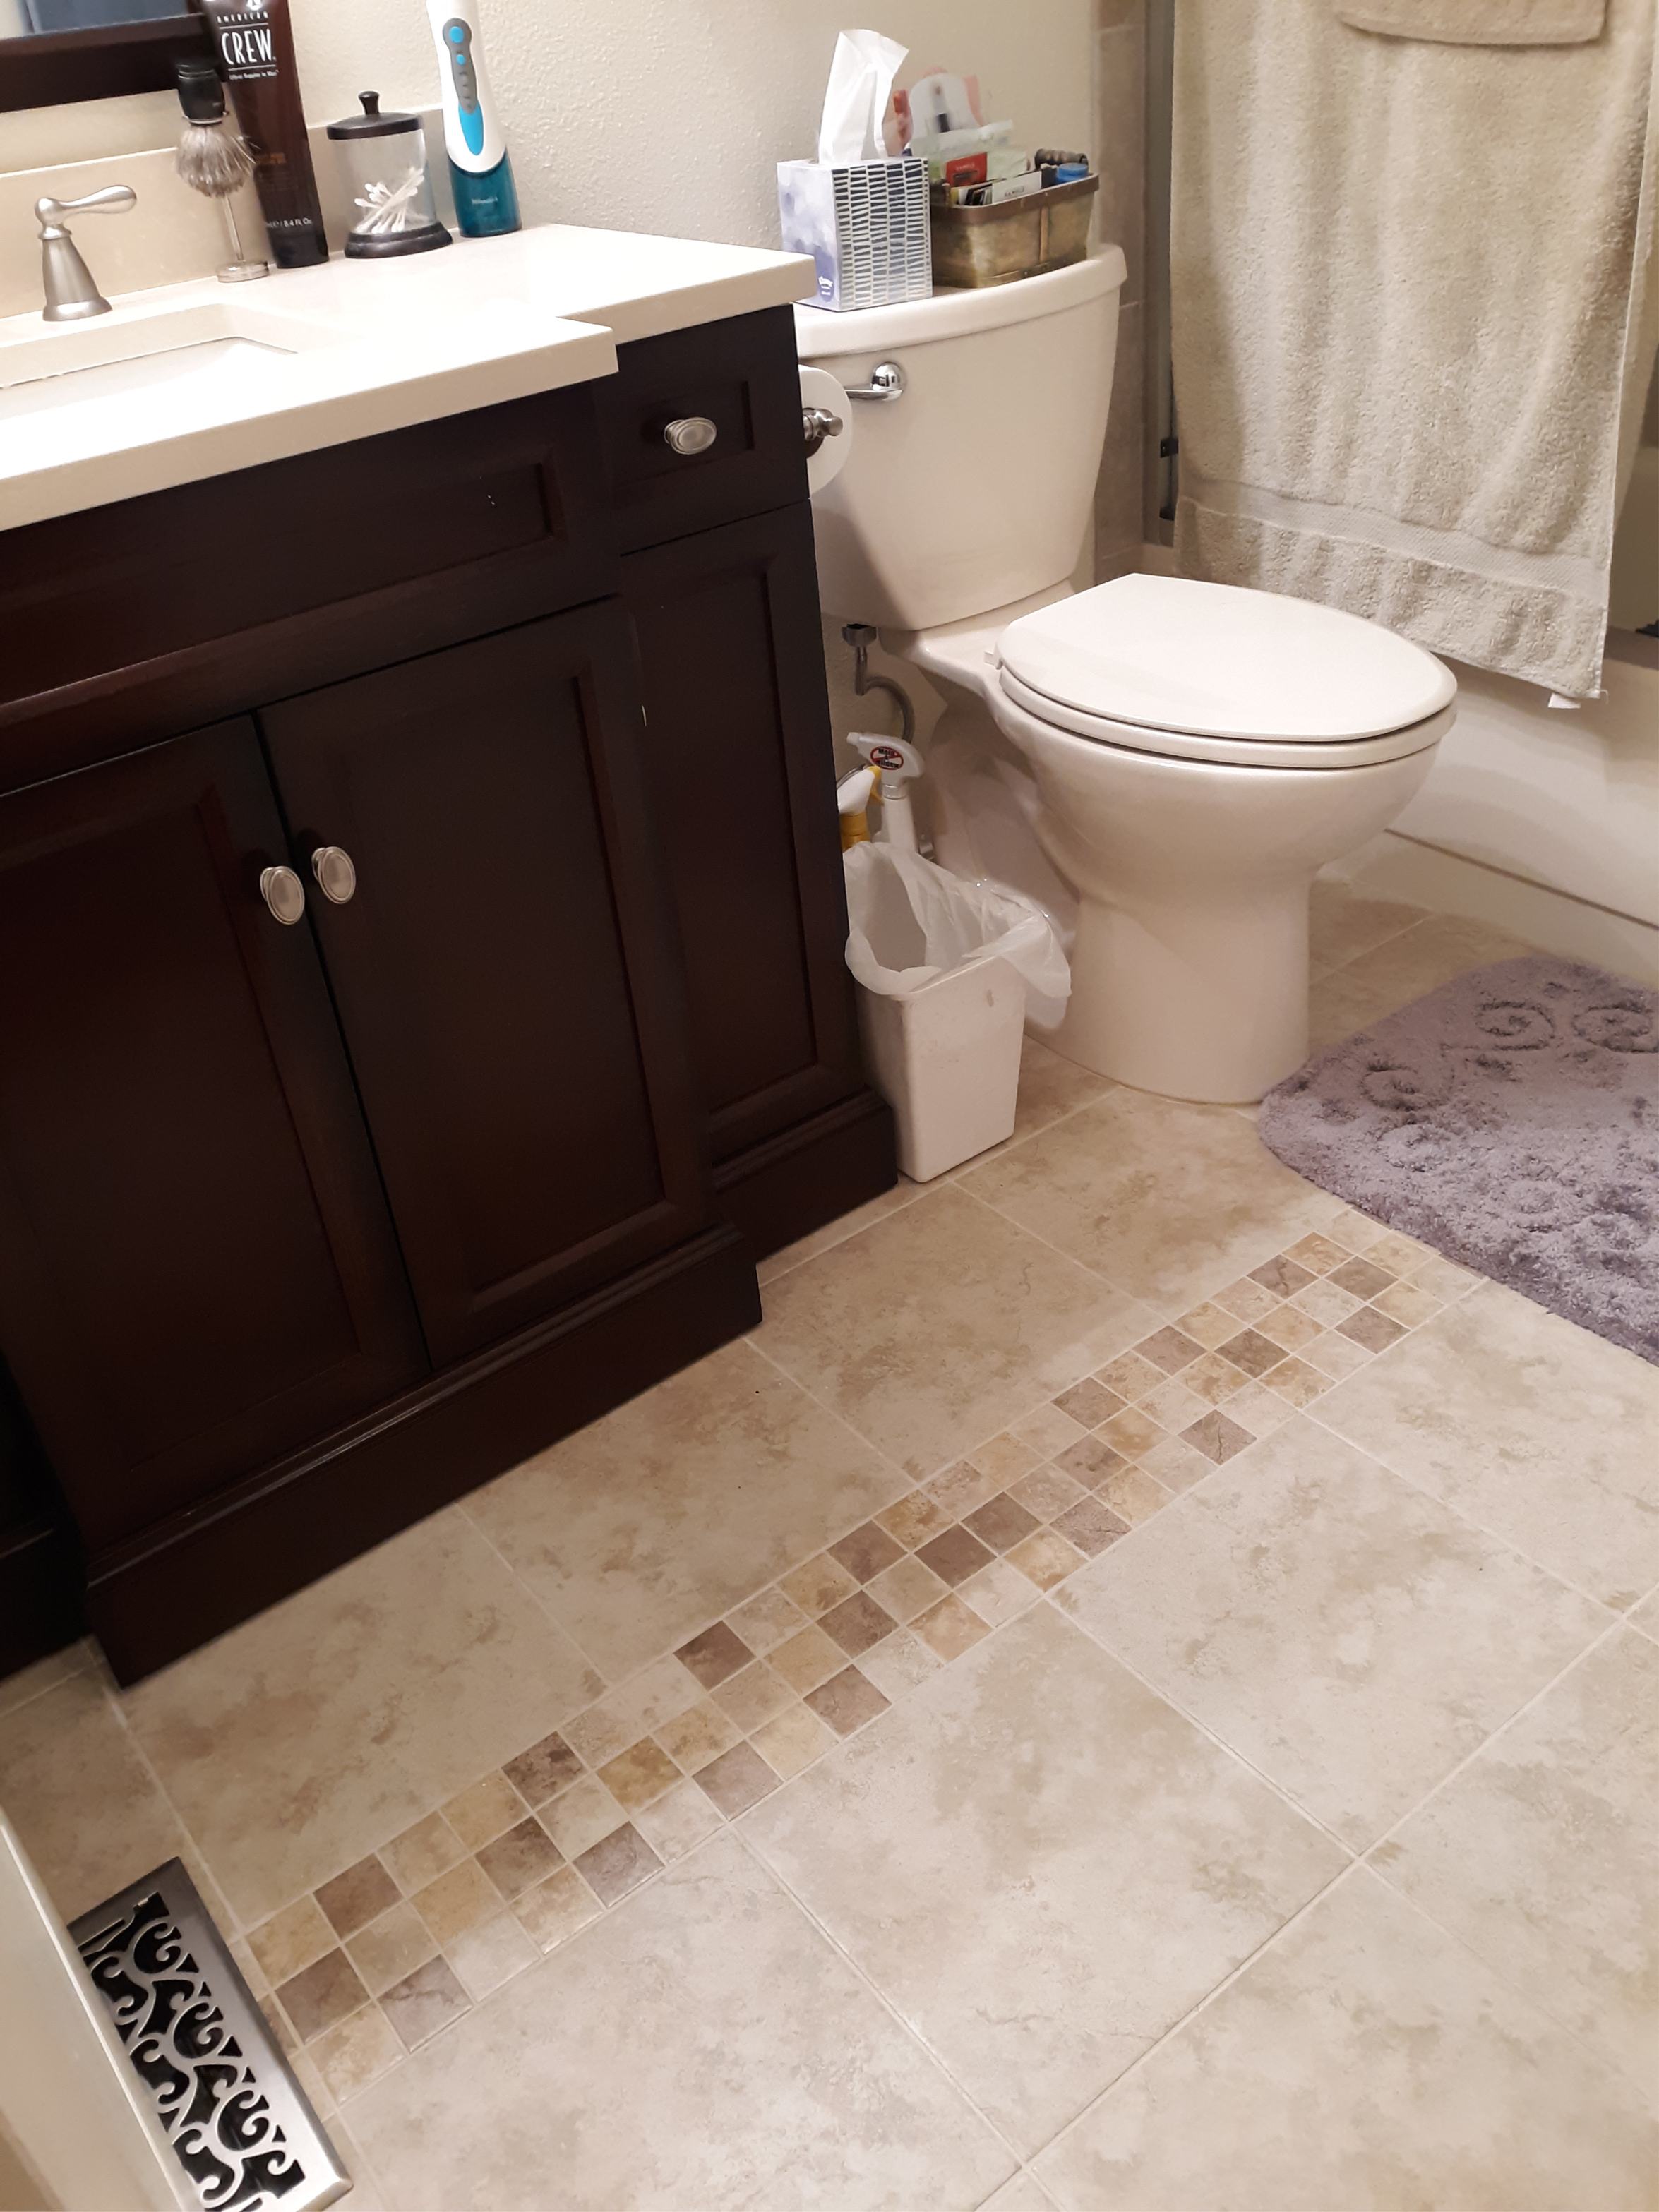 Home Repair-Bathroom Upgrade-Bathroom Upgrade #2 By Acorn Maintenance Repair